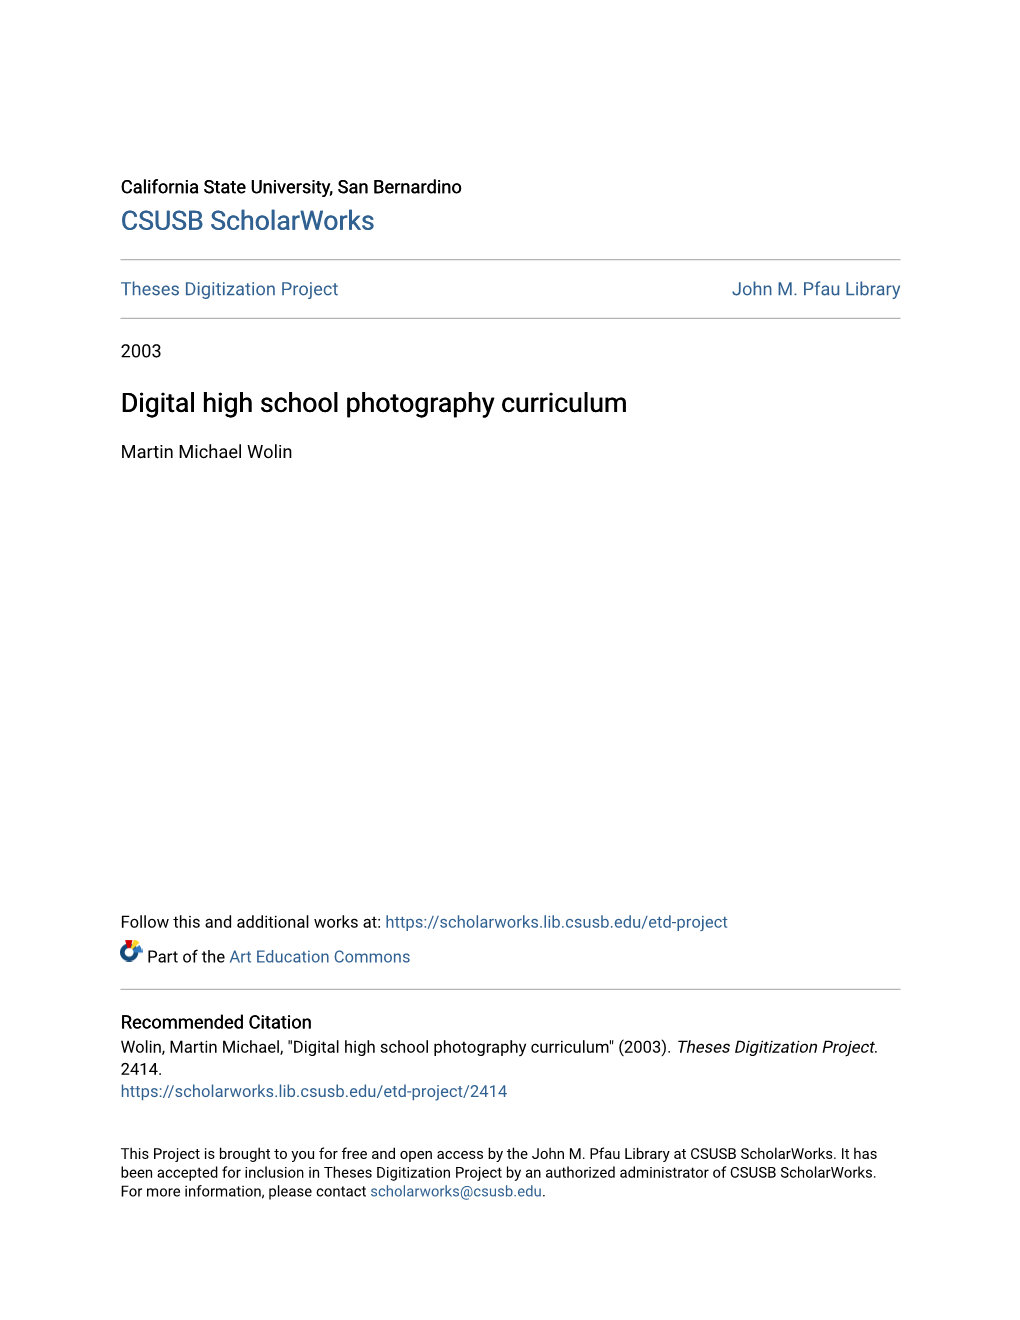 Digital High School Photography Curriculum